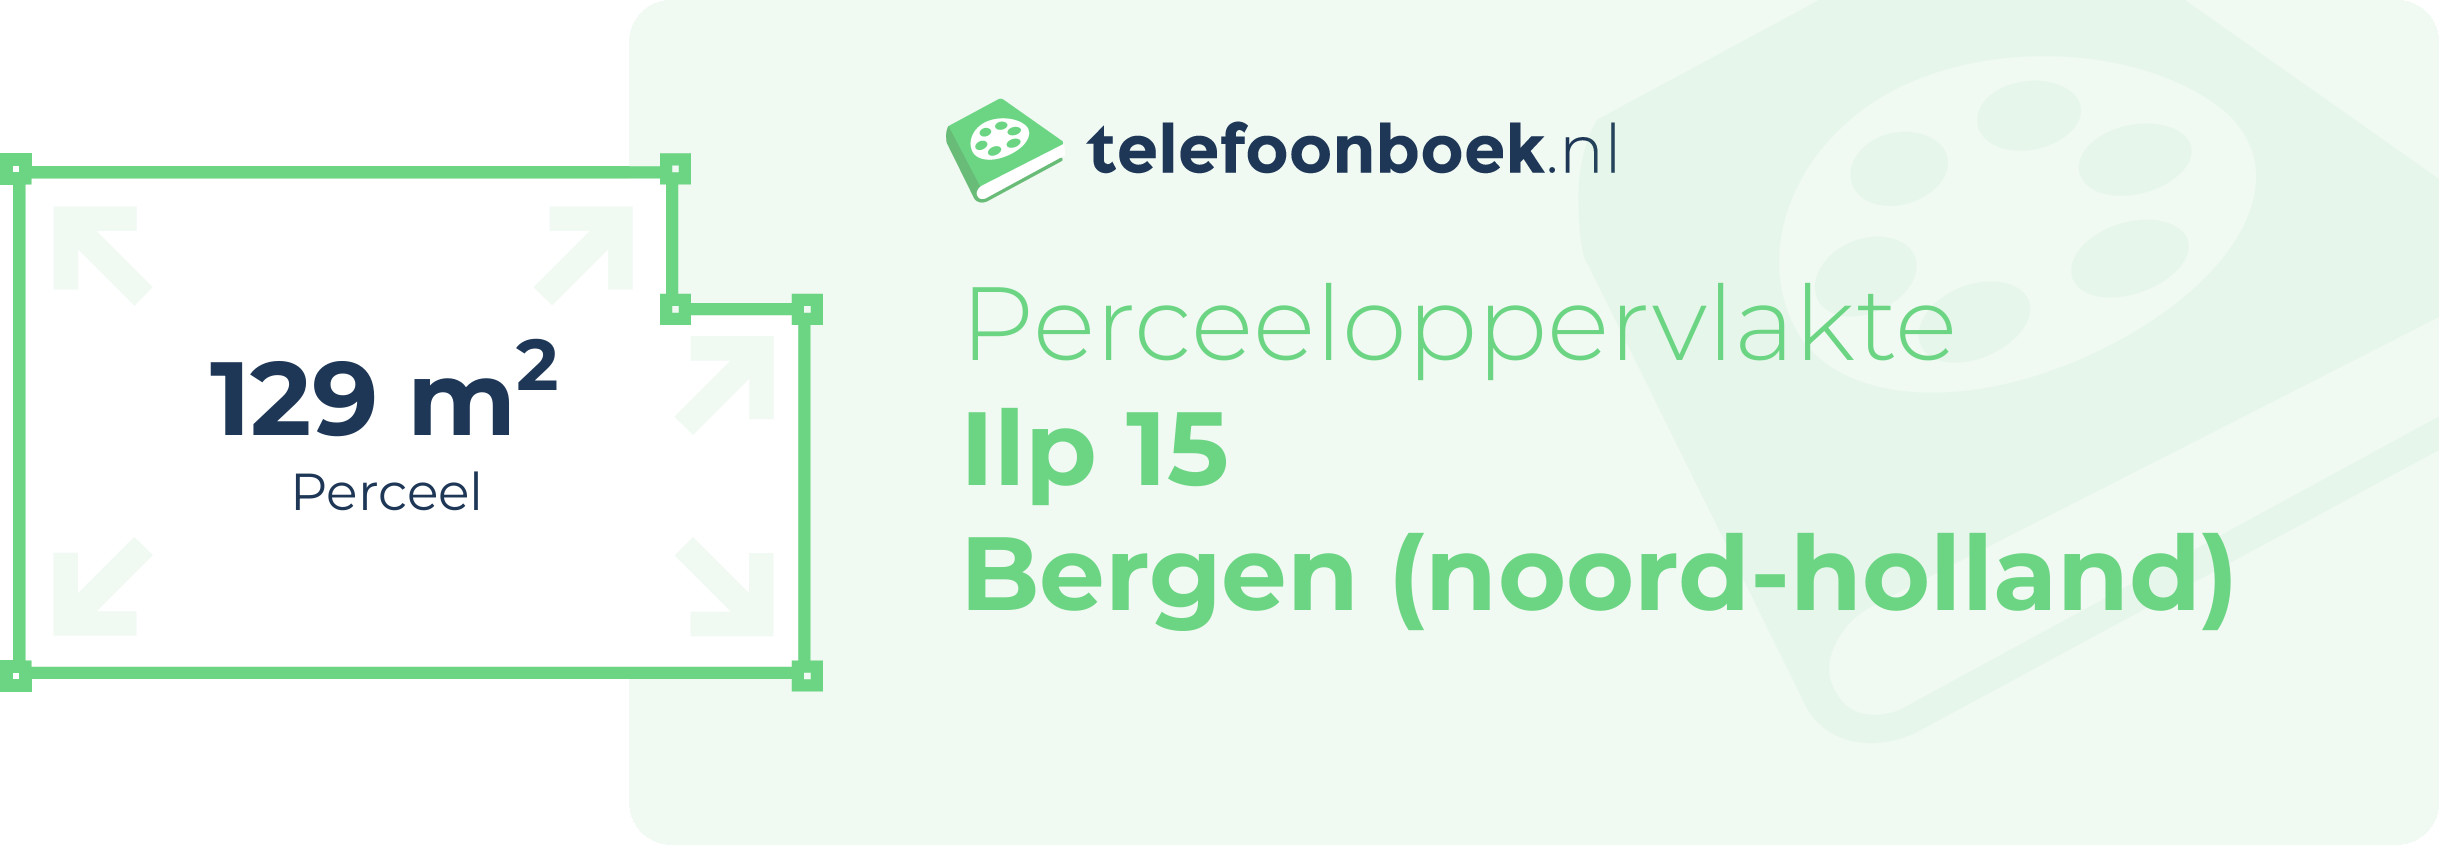 Perceeloppervlakte Ilp 15 Bergen (Noord-Holland)